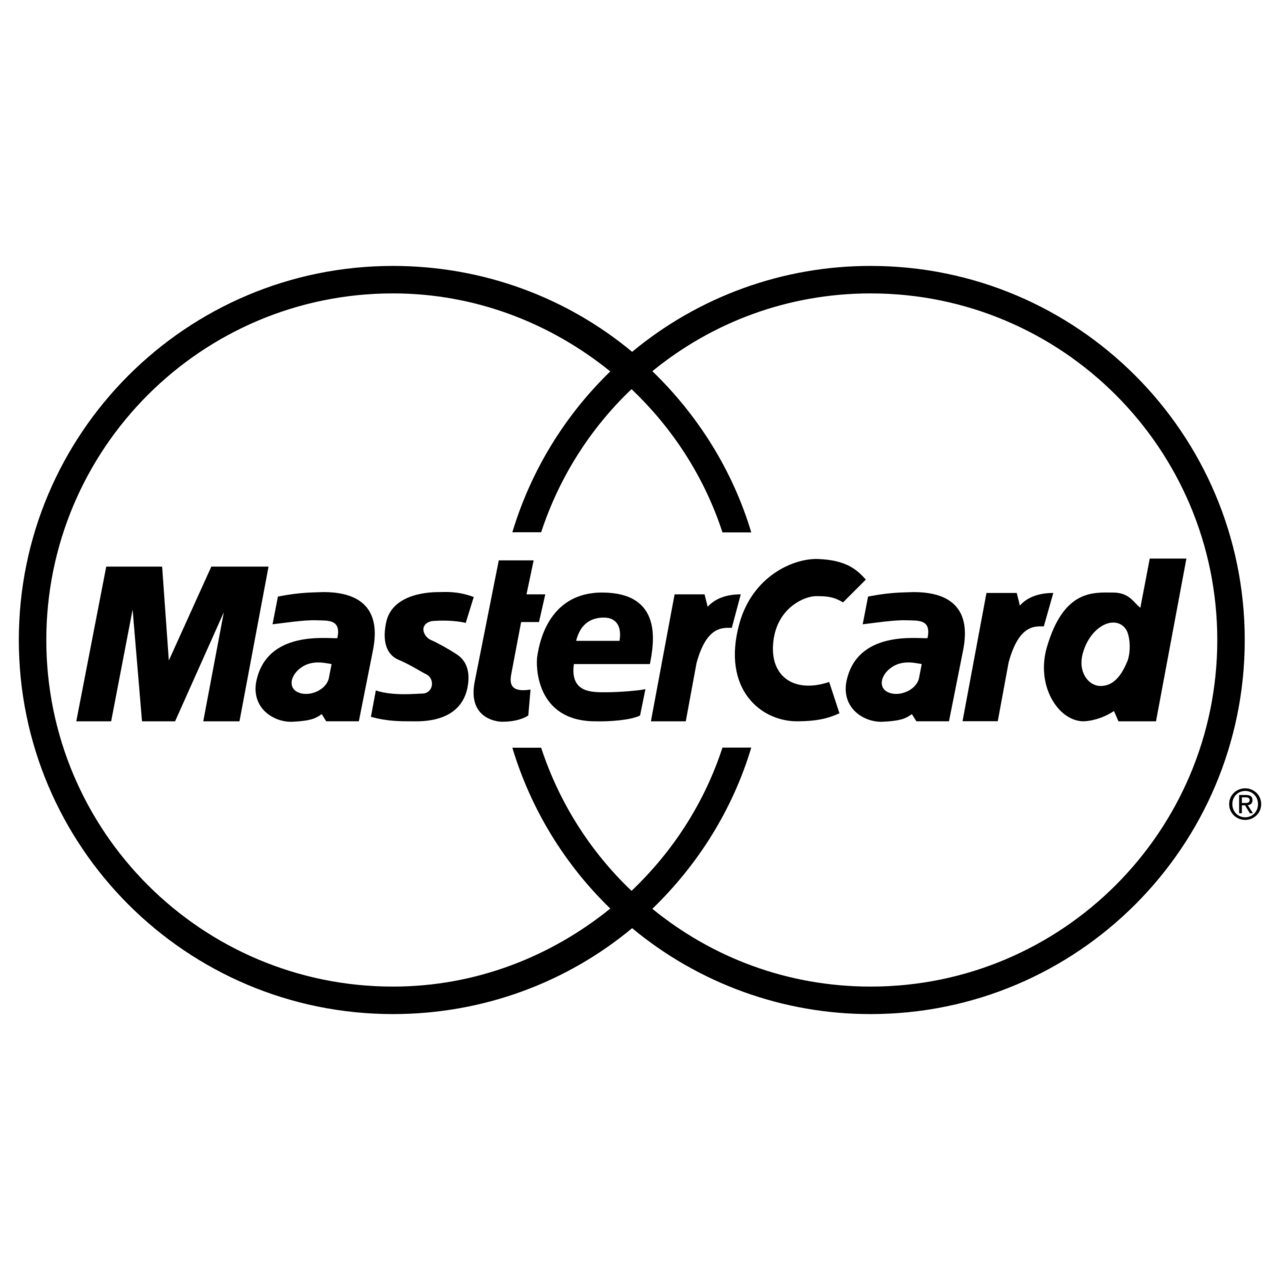 Mastercard Transparent Image